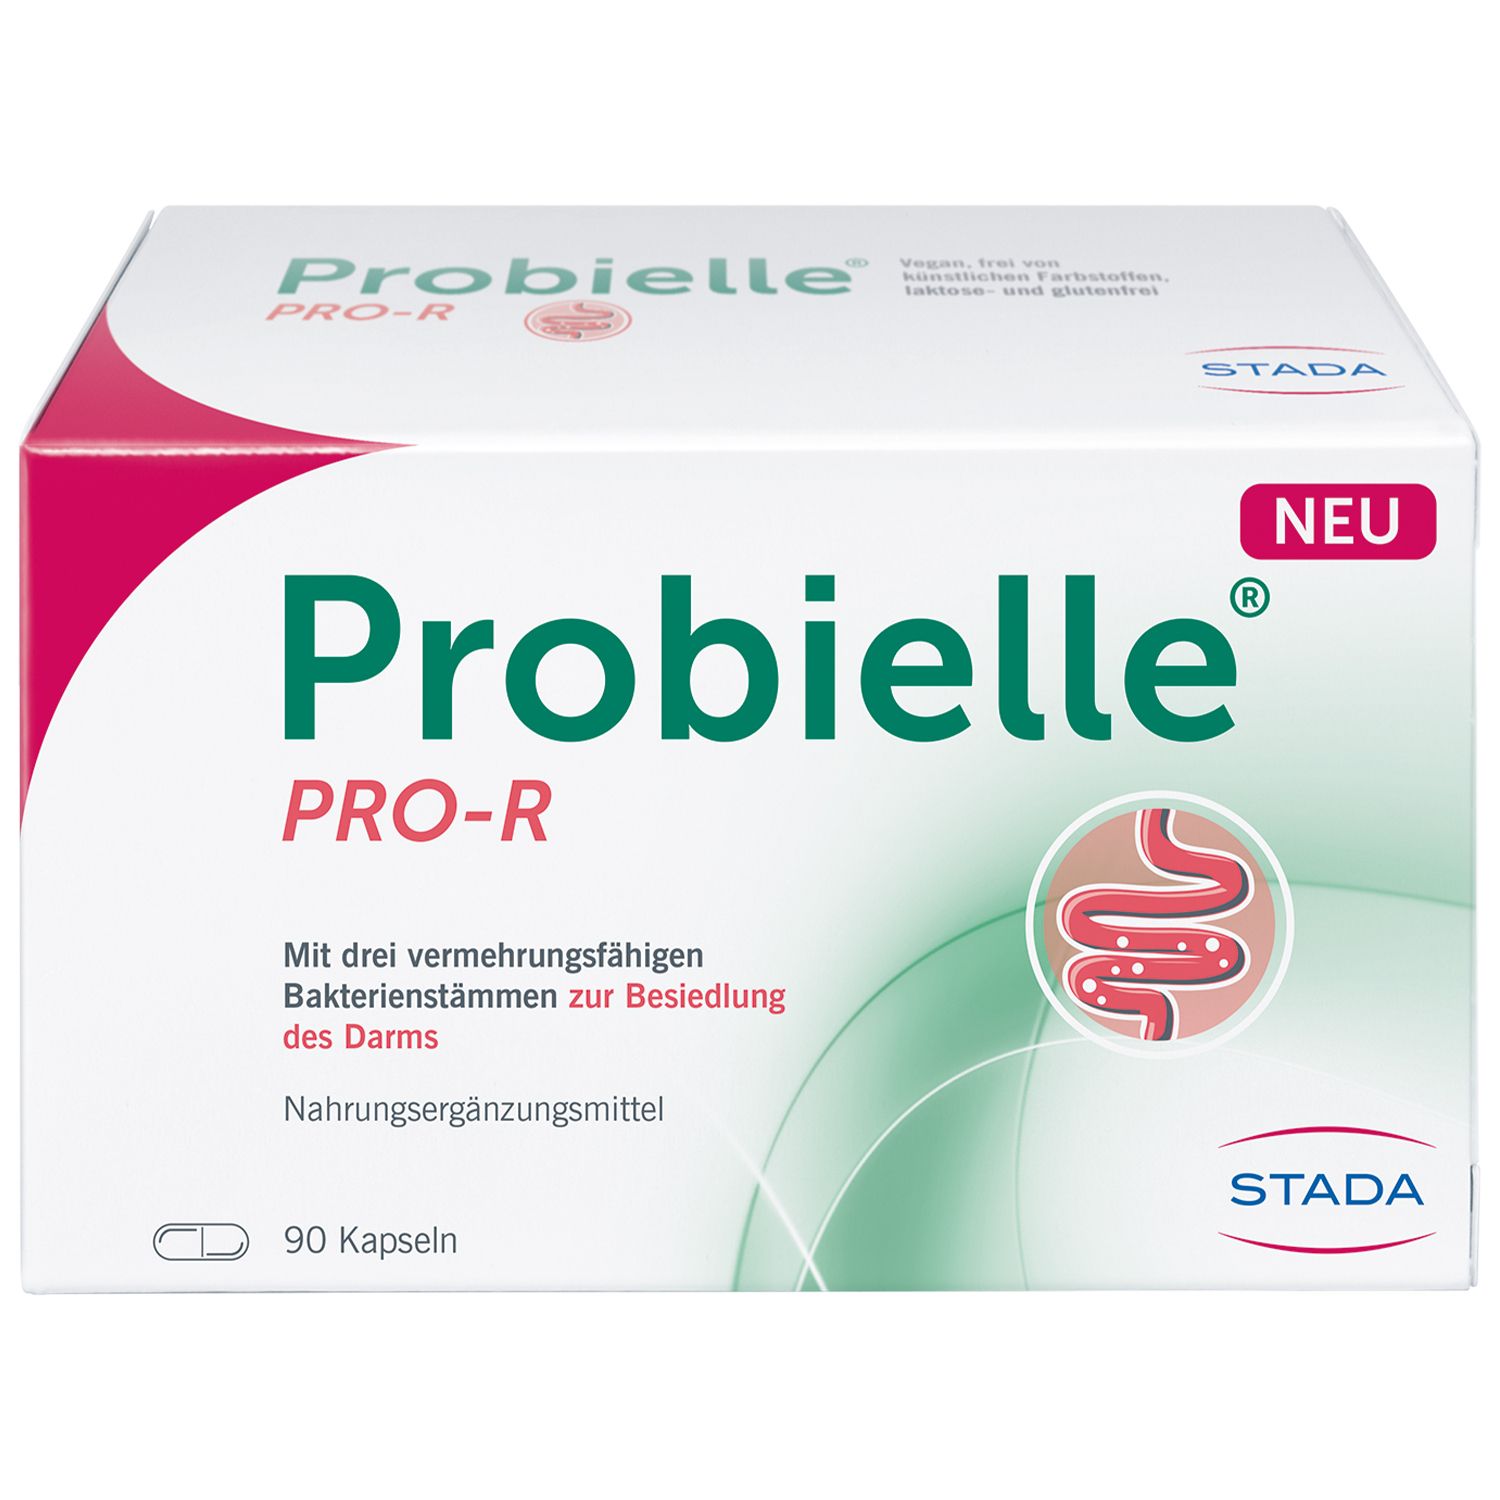 Probielle® Pro-R capsules